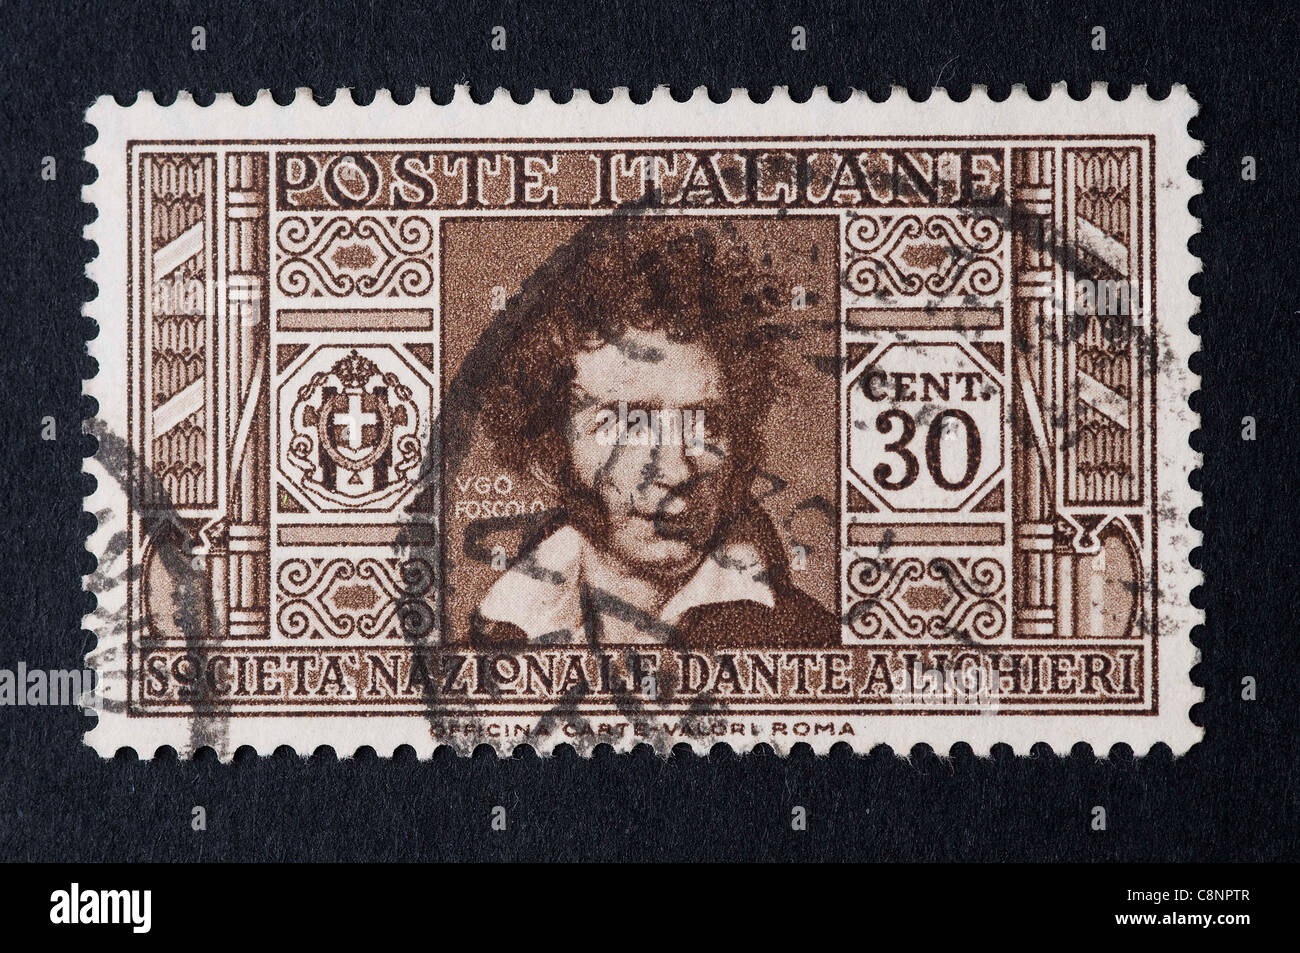 Ugo Foscolo, Italian writer, revolutionary and poet,  in old italian Kingdom stamp Stock Photo